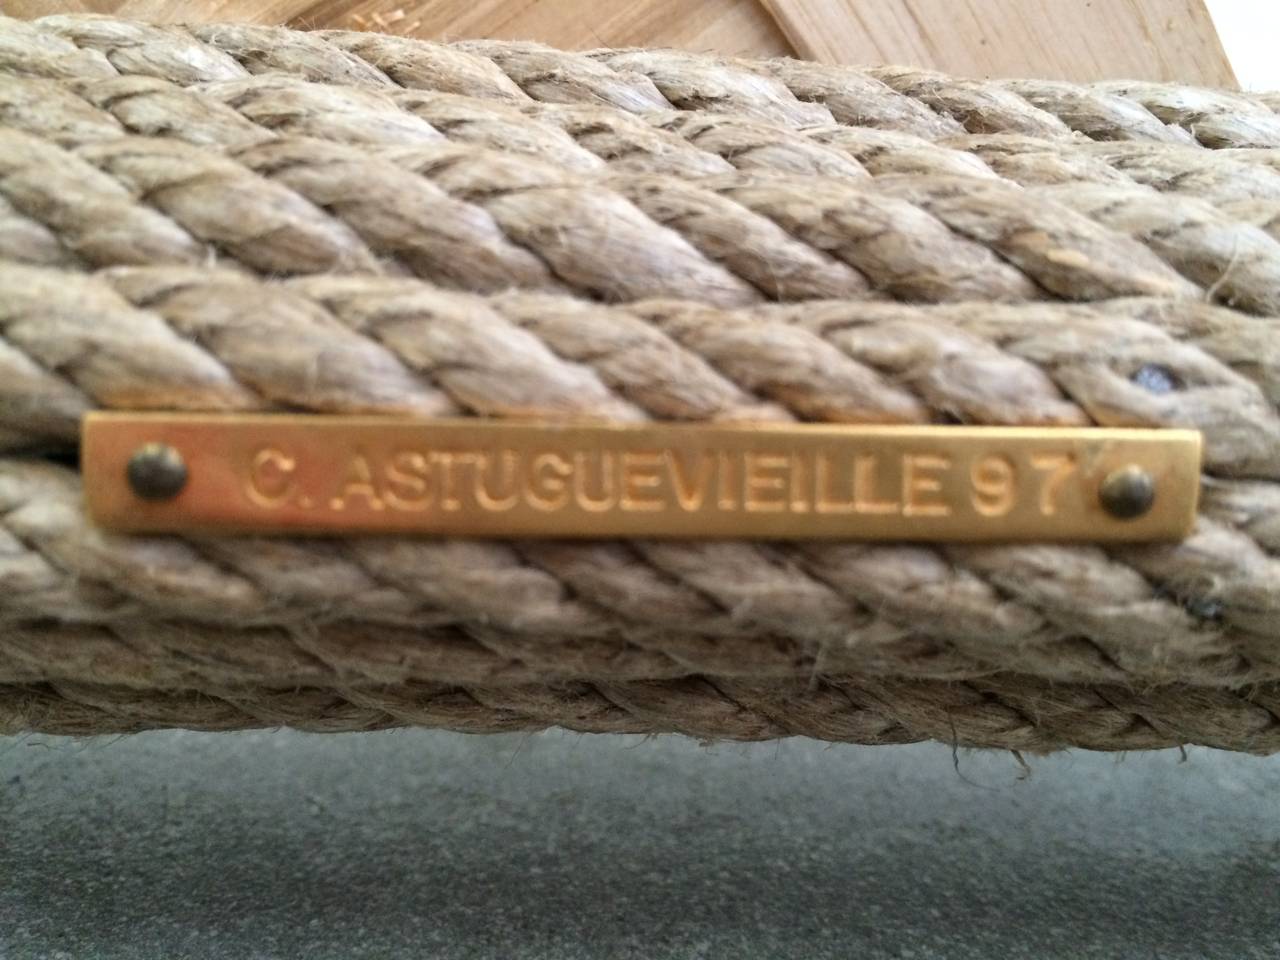 Leather Rare Christian Astuguevieille 